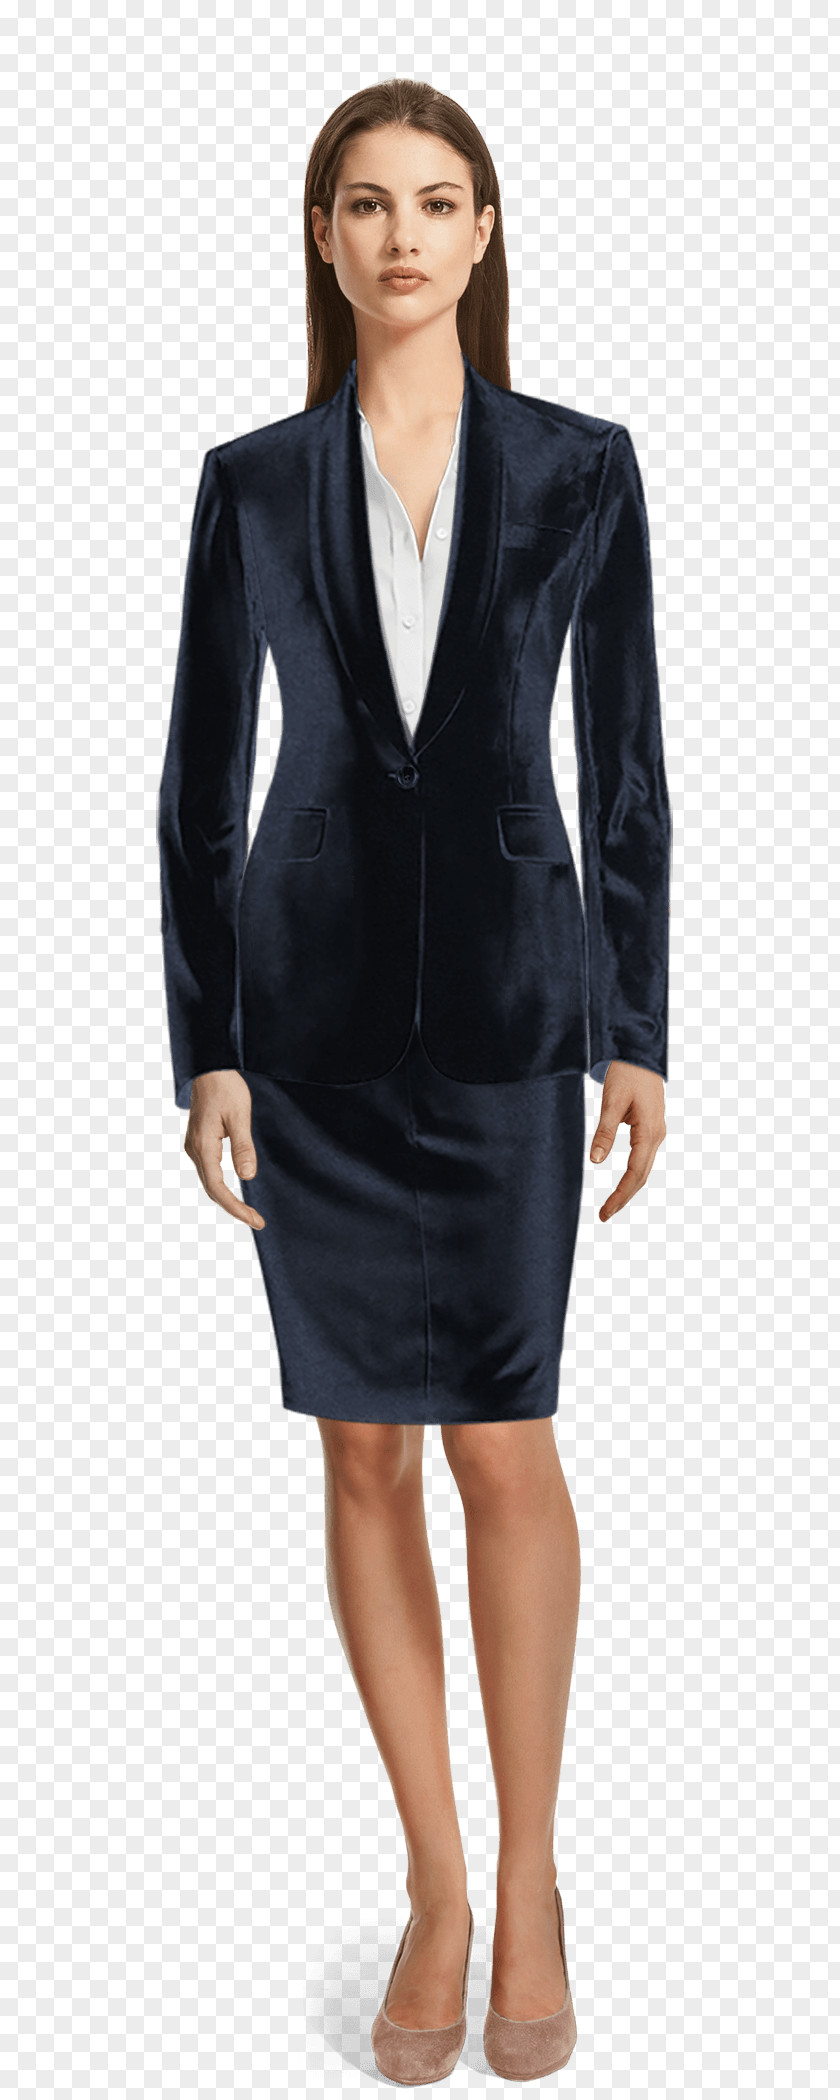 FEMALE SUIT Tuxedo Suit Jakkupuku Tailor Clothing PNG